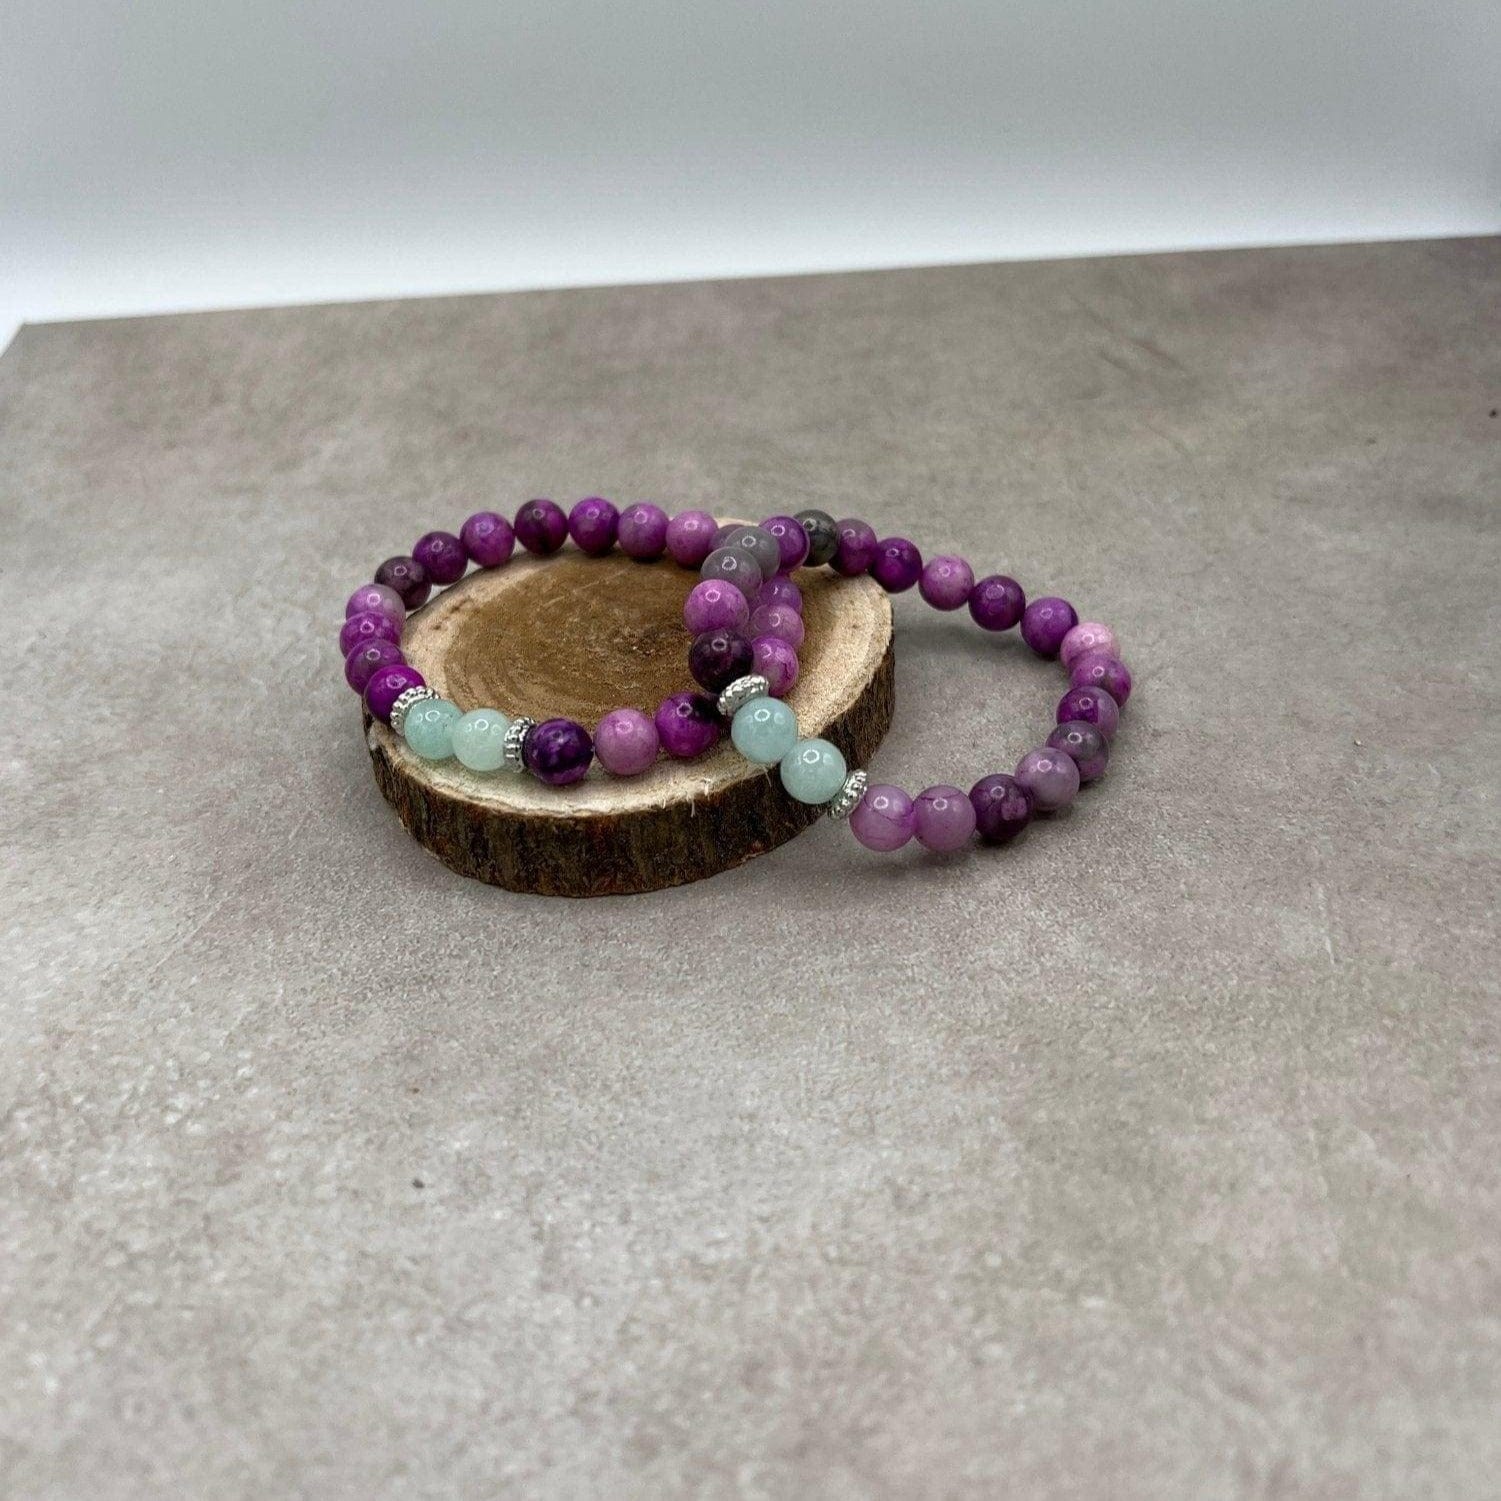 Bec Sue Jewelry Shop chakra bracelet 6.5 / purple Sugilite Jewelry, Sugilite Stone Bracelet Tags 531